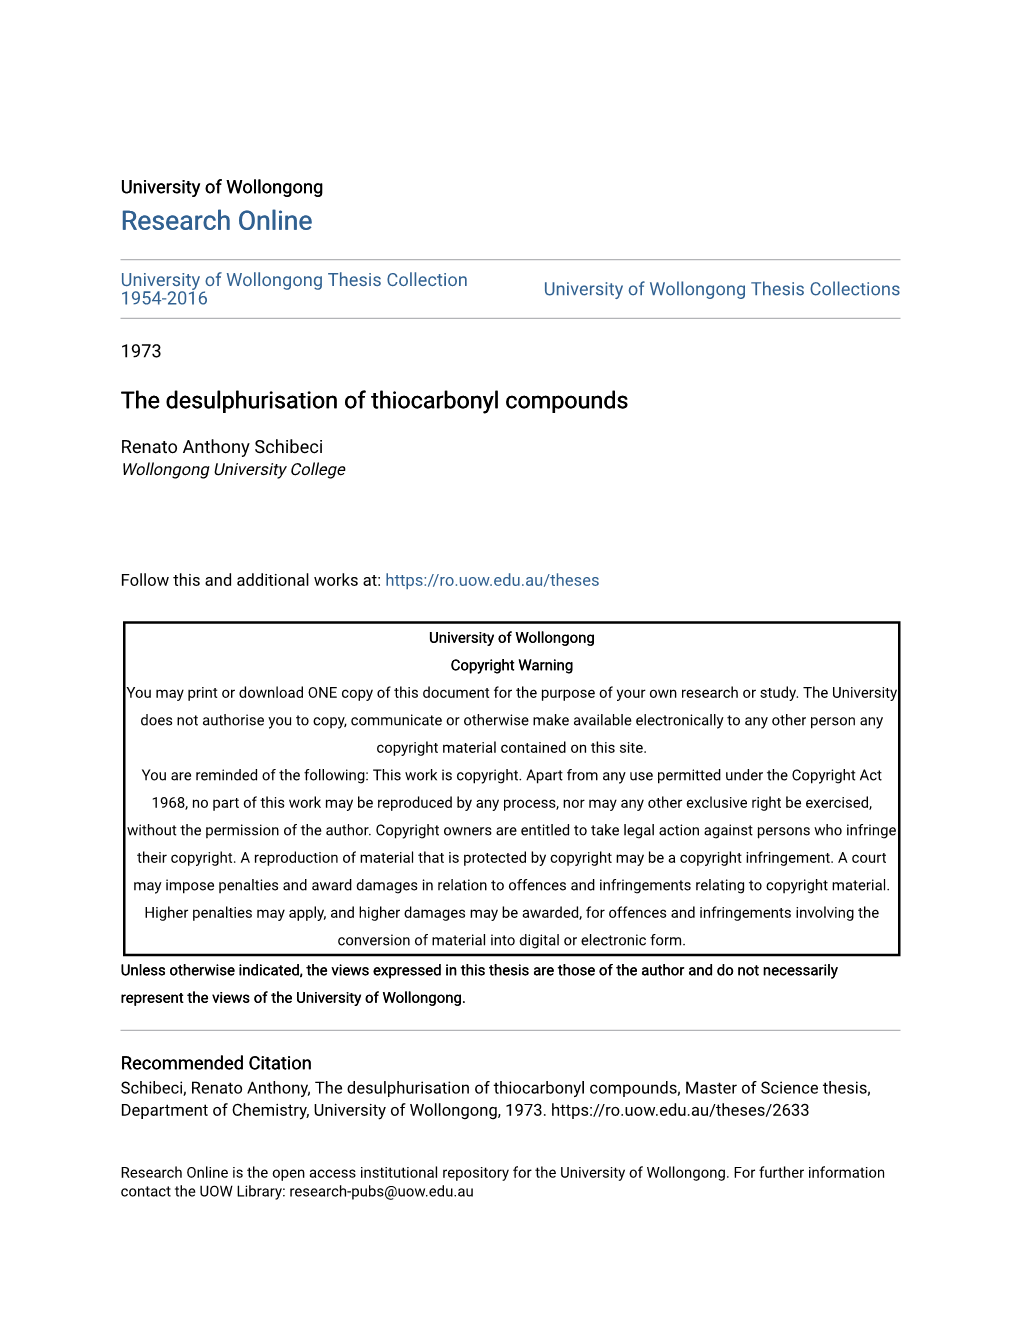 The Desulphurisation of Thiocarbonyl Compounds